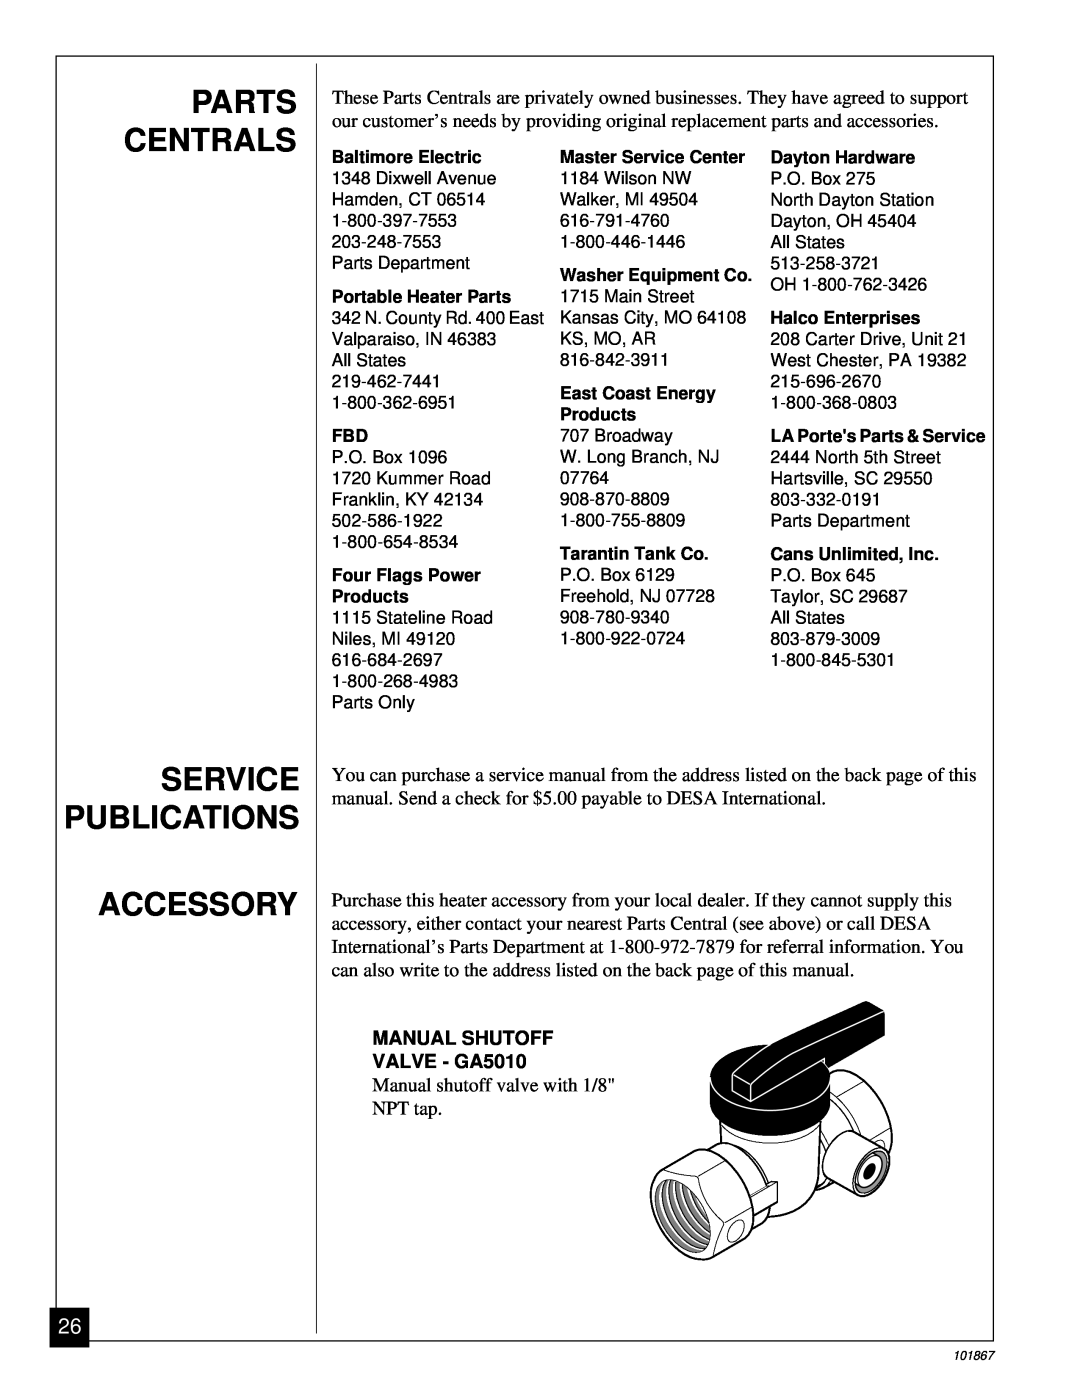 Desa CGN10R installation manual Parts Centrals, Service Publications Accessory, MANUAL SHUTOFF VALVE - GA5010 